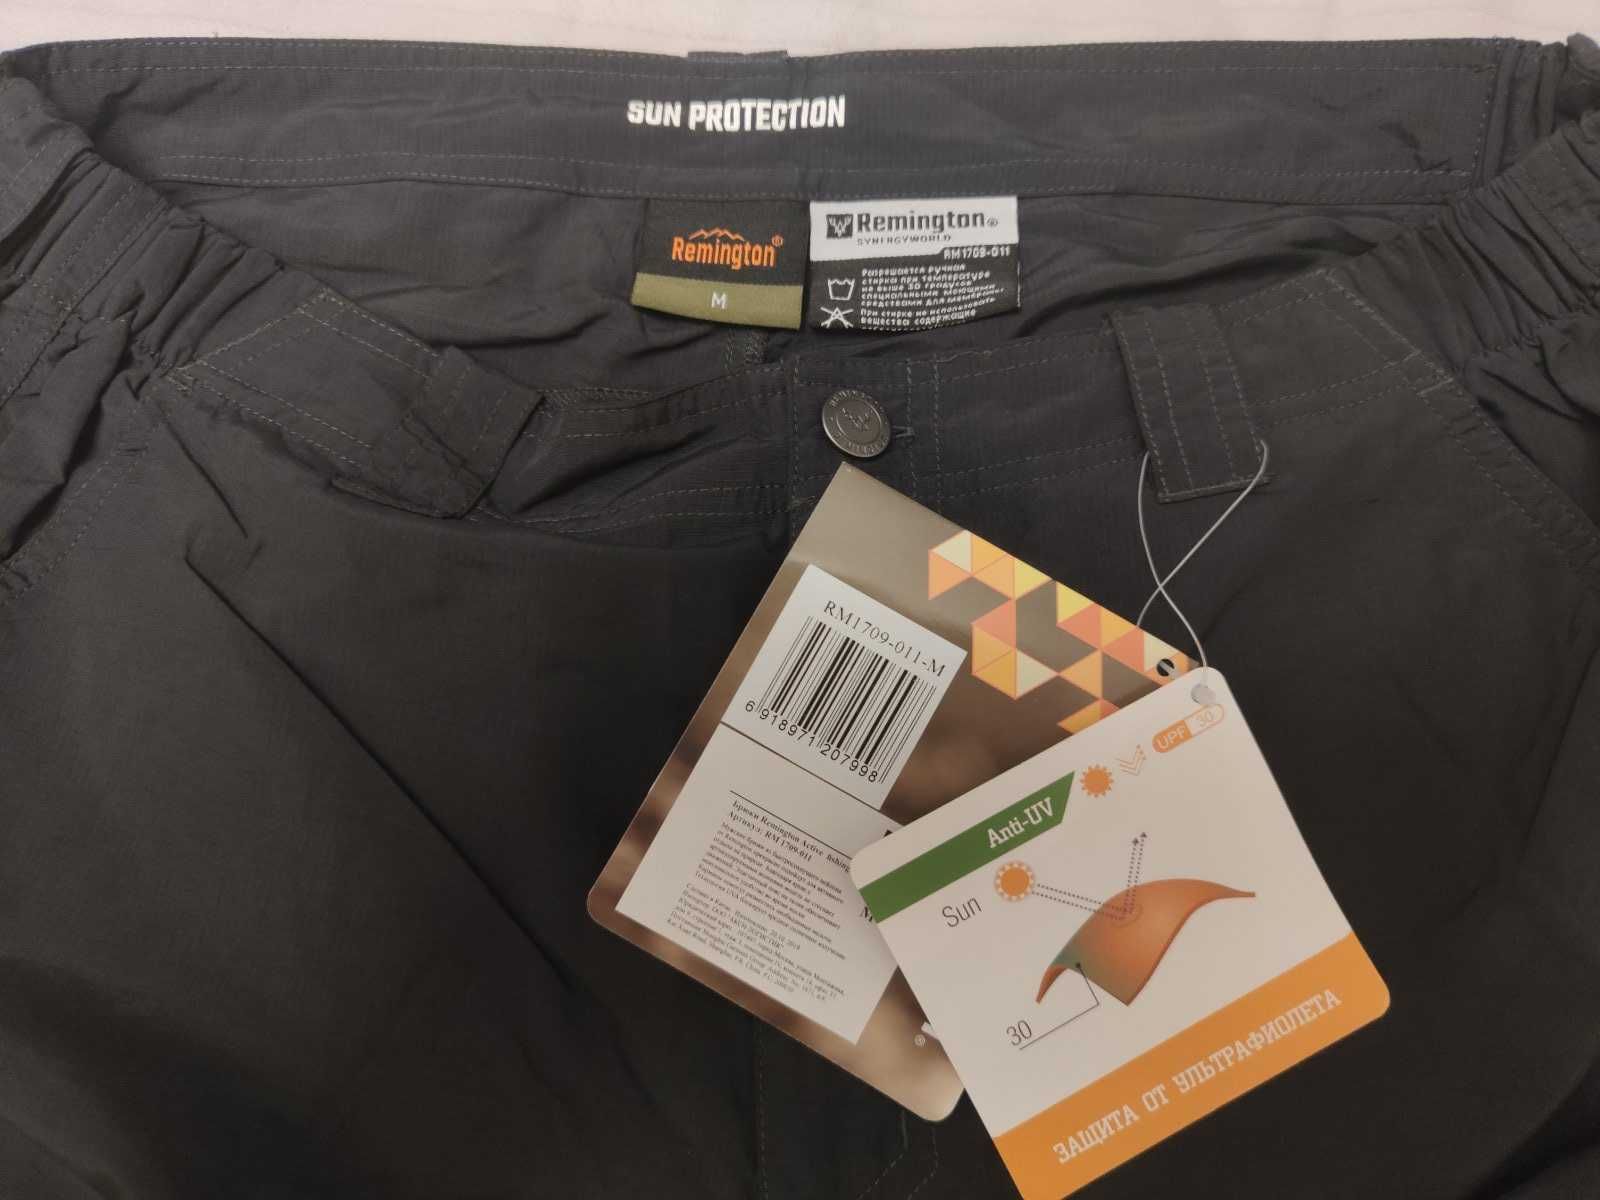 легкие летние штаны для рыбалки Remington Synergy World, новые (М)